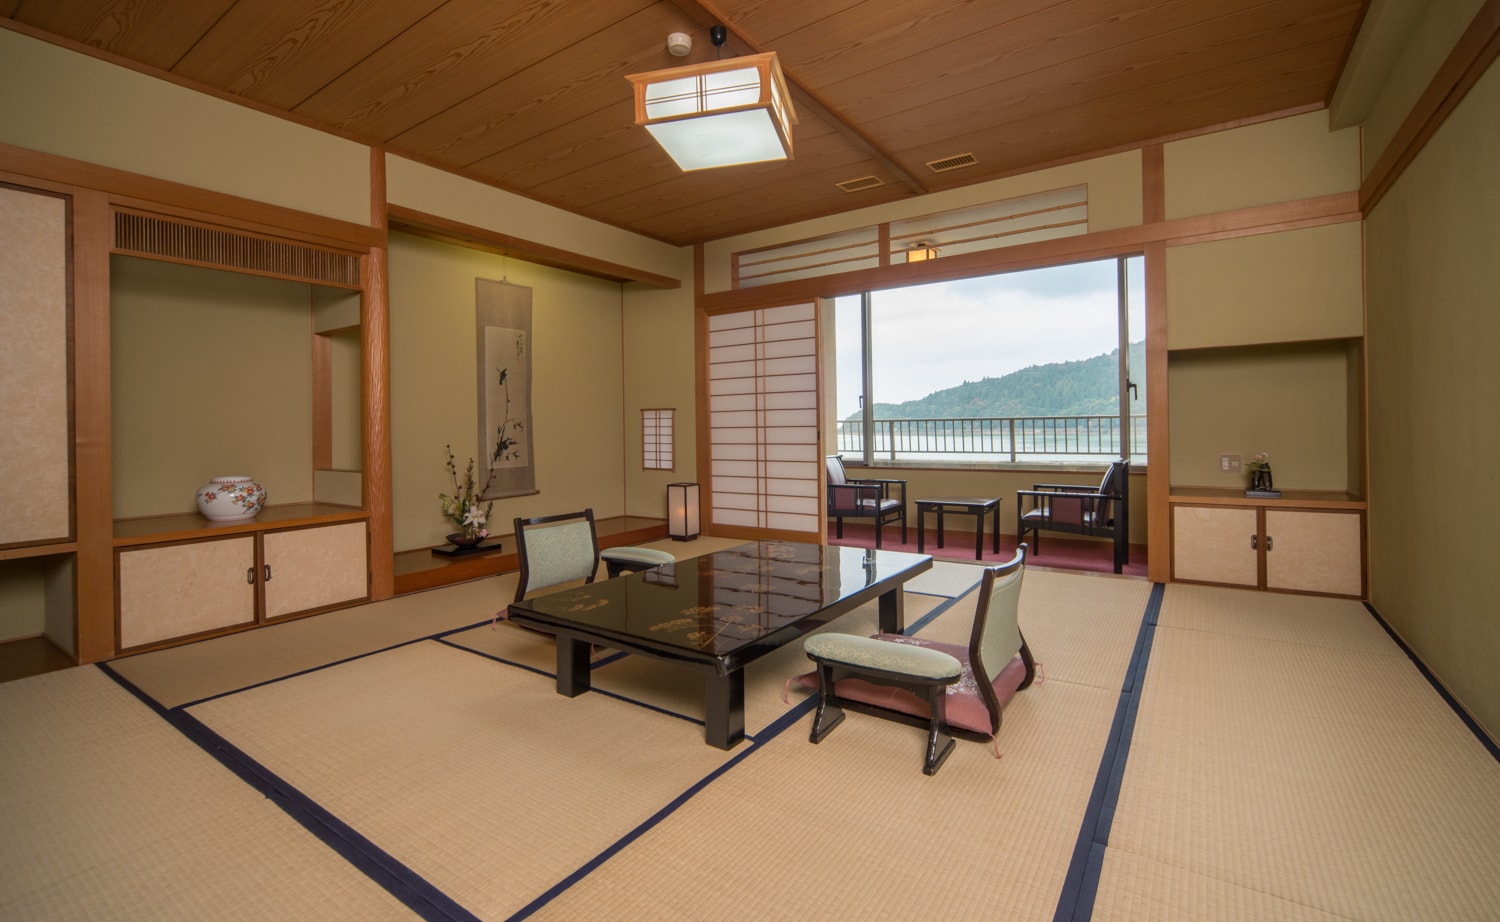 Standard Japanese room